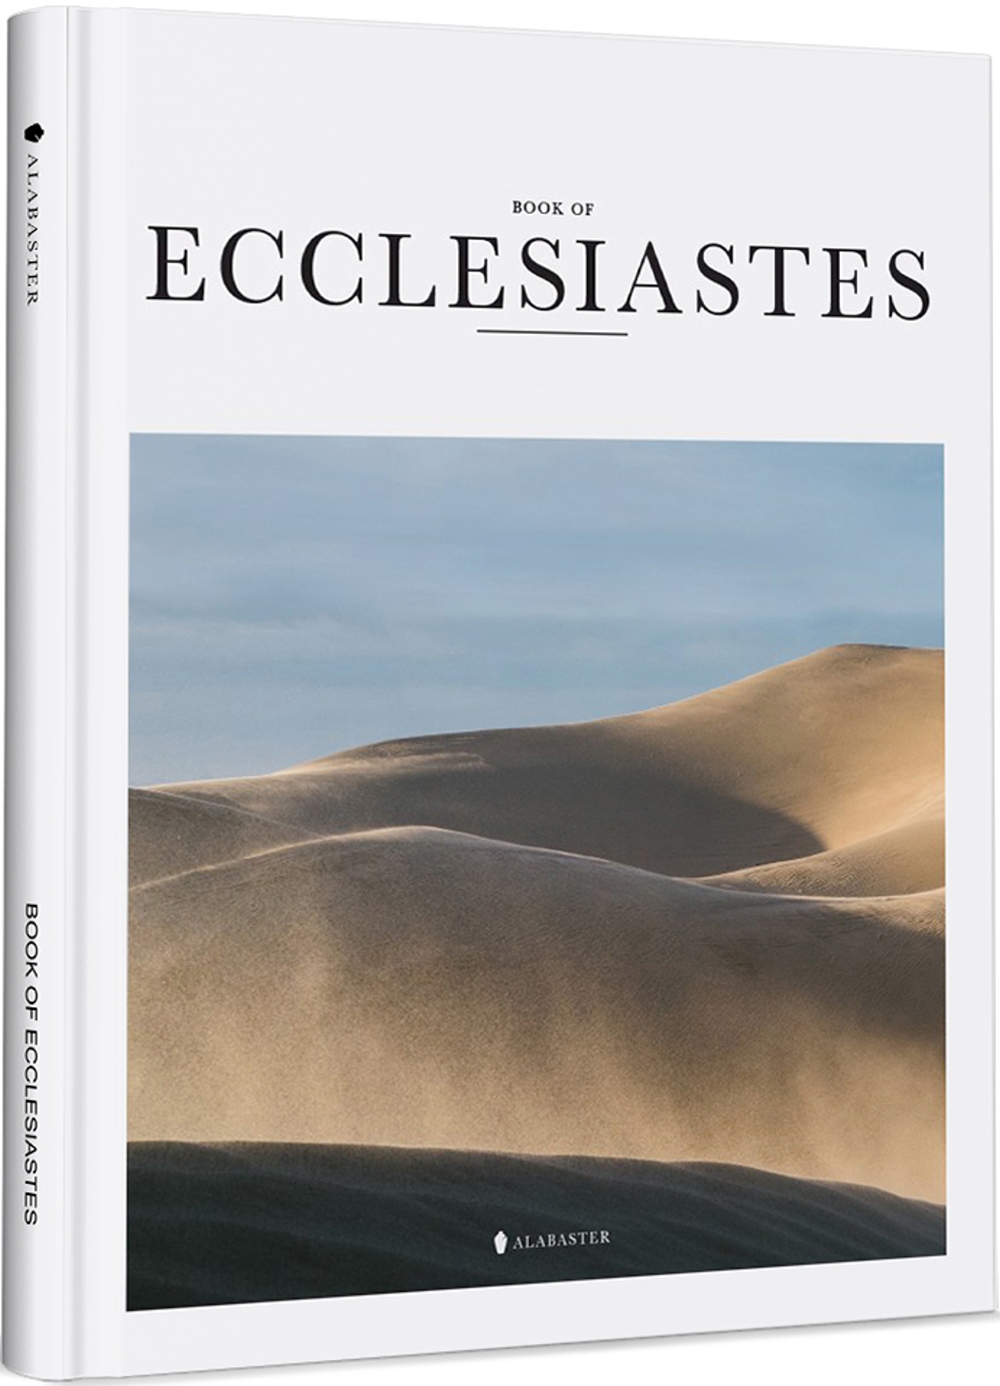 BOOK OF ECCLESIASTES(New Livin...